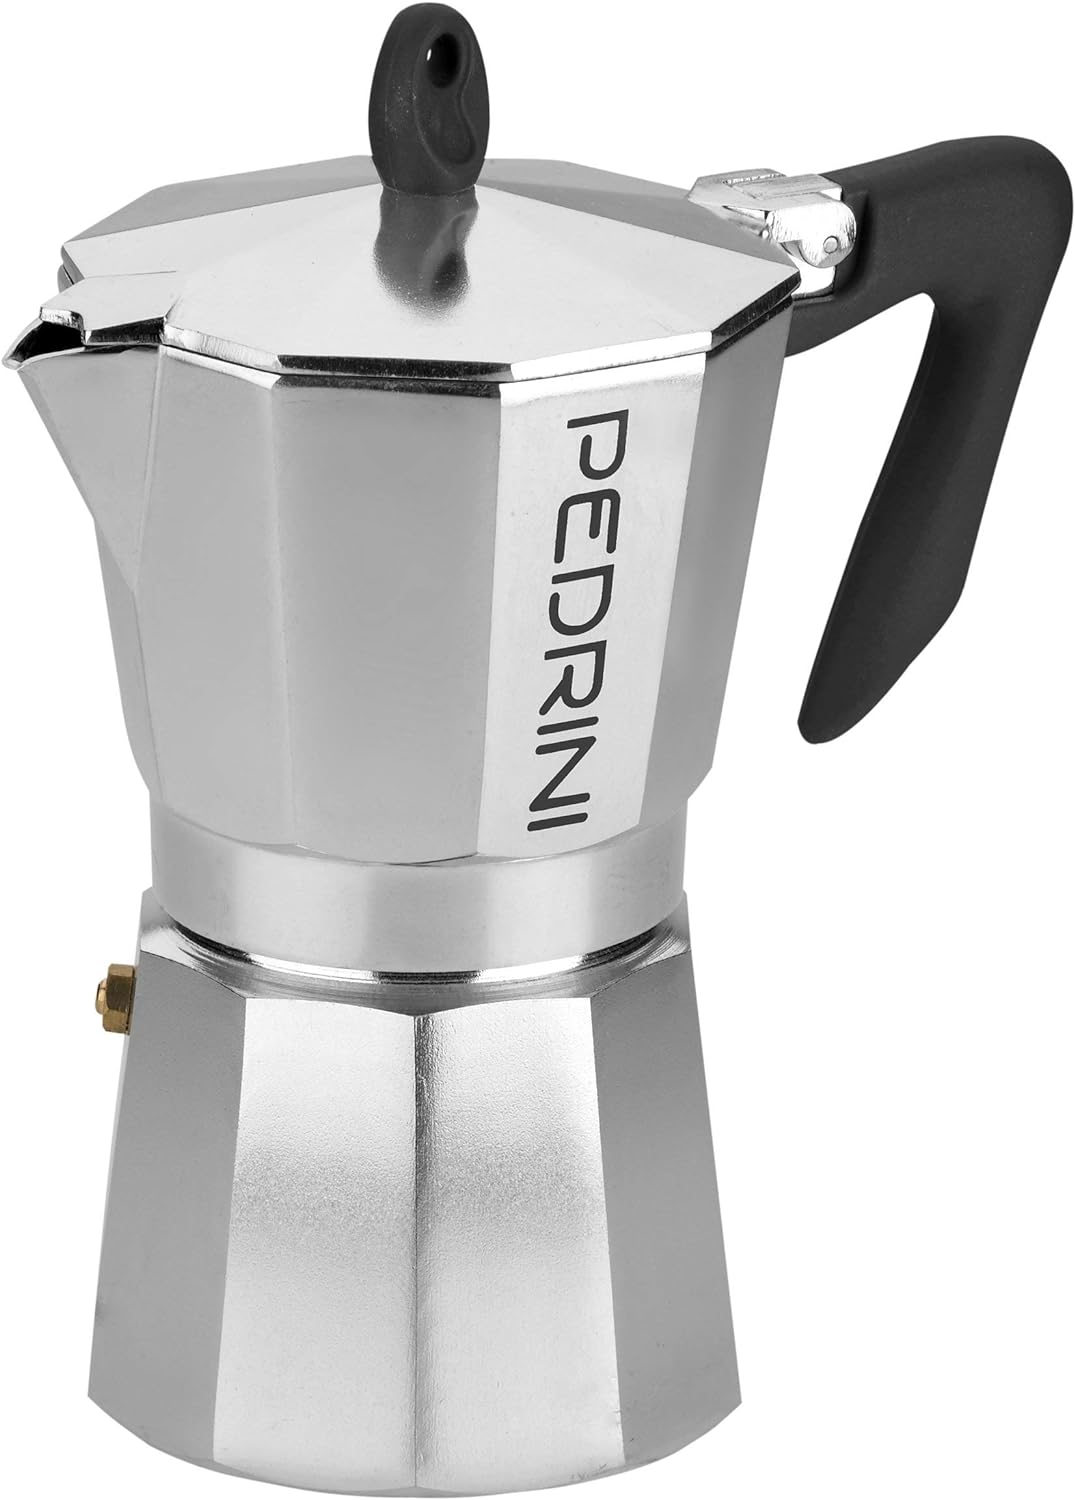 Pedrini coffee machine, Moka for espresso, aluminum alloy EN 601, Italian design (black, 6 cup)